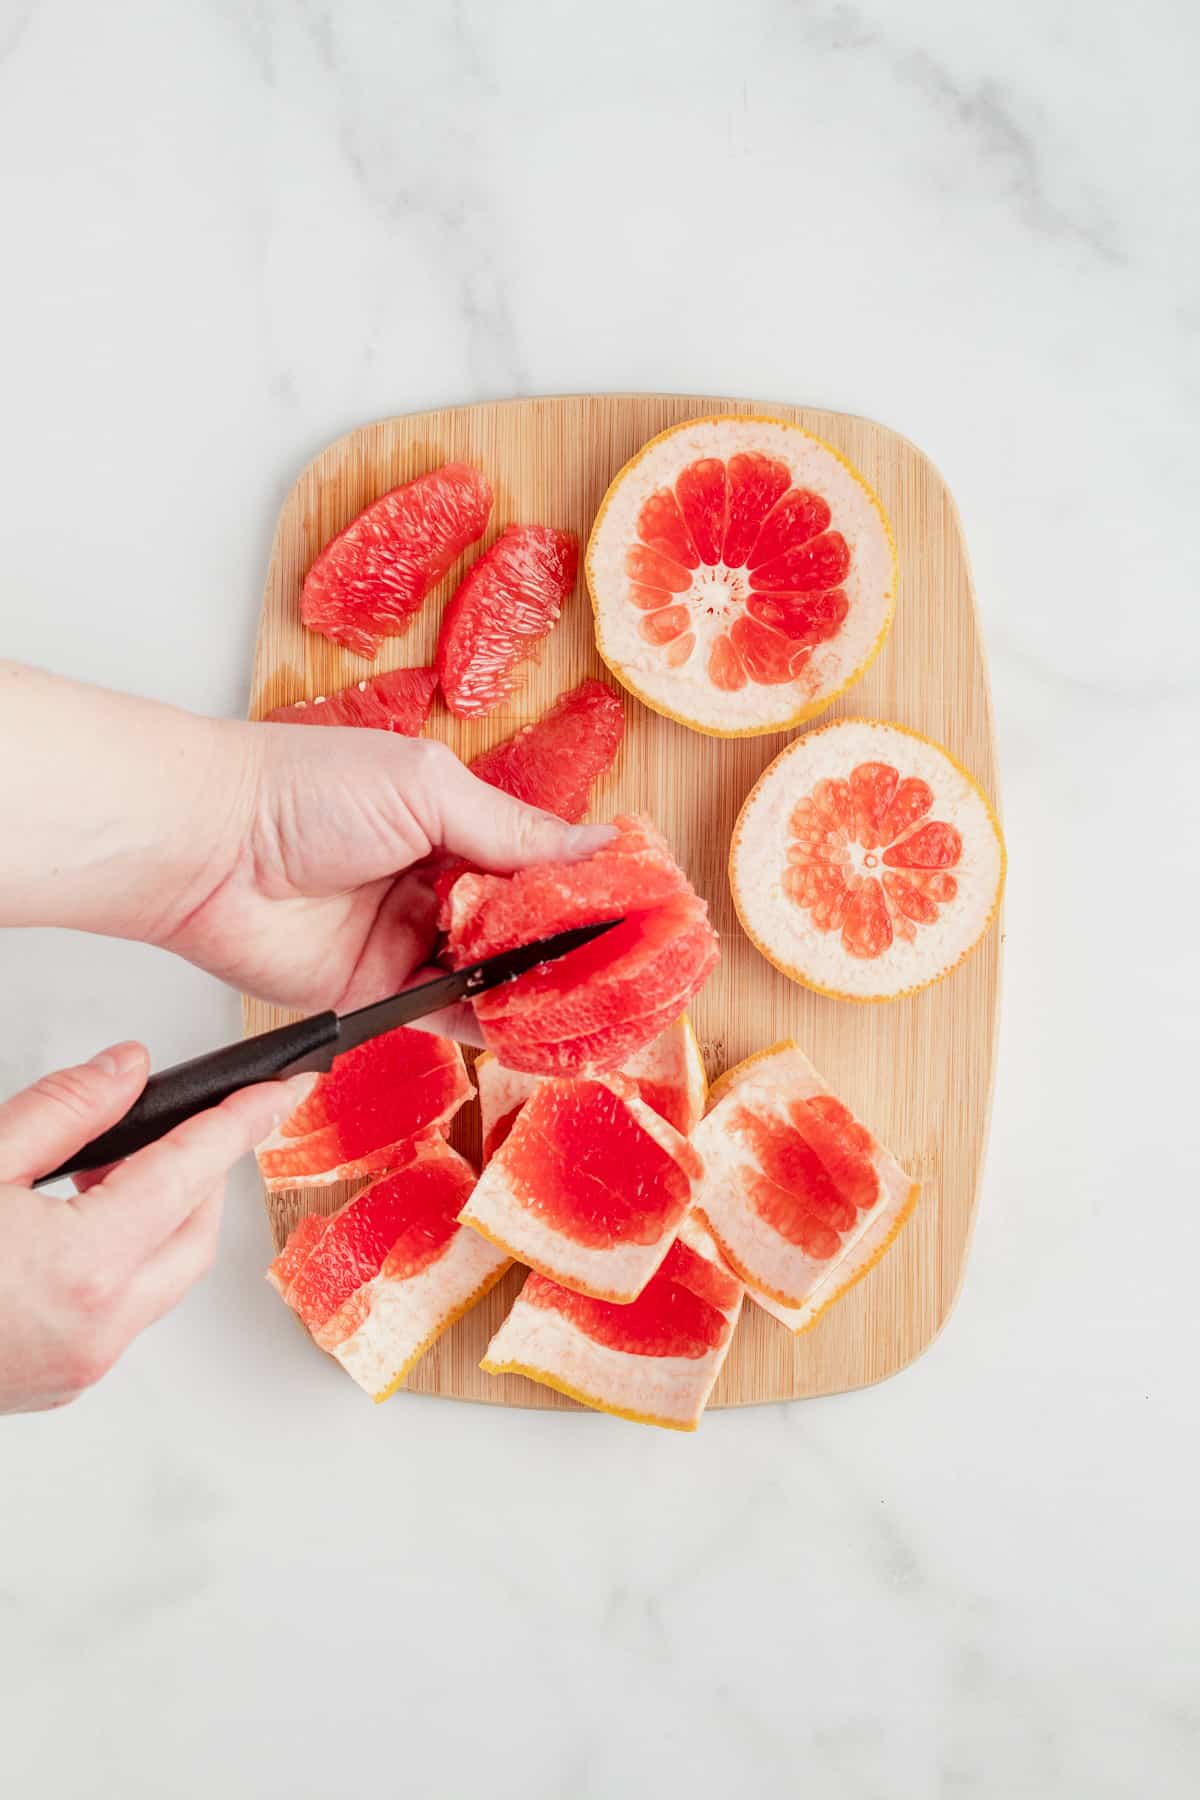 Cutting grapefruit into segments on a cutting board.